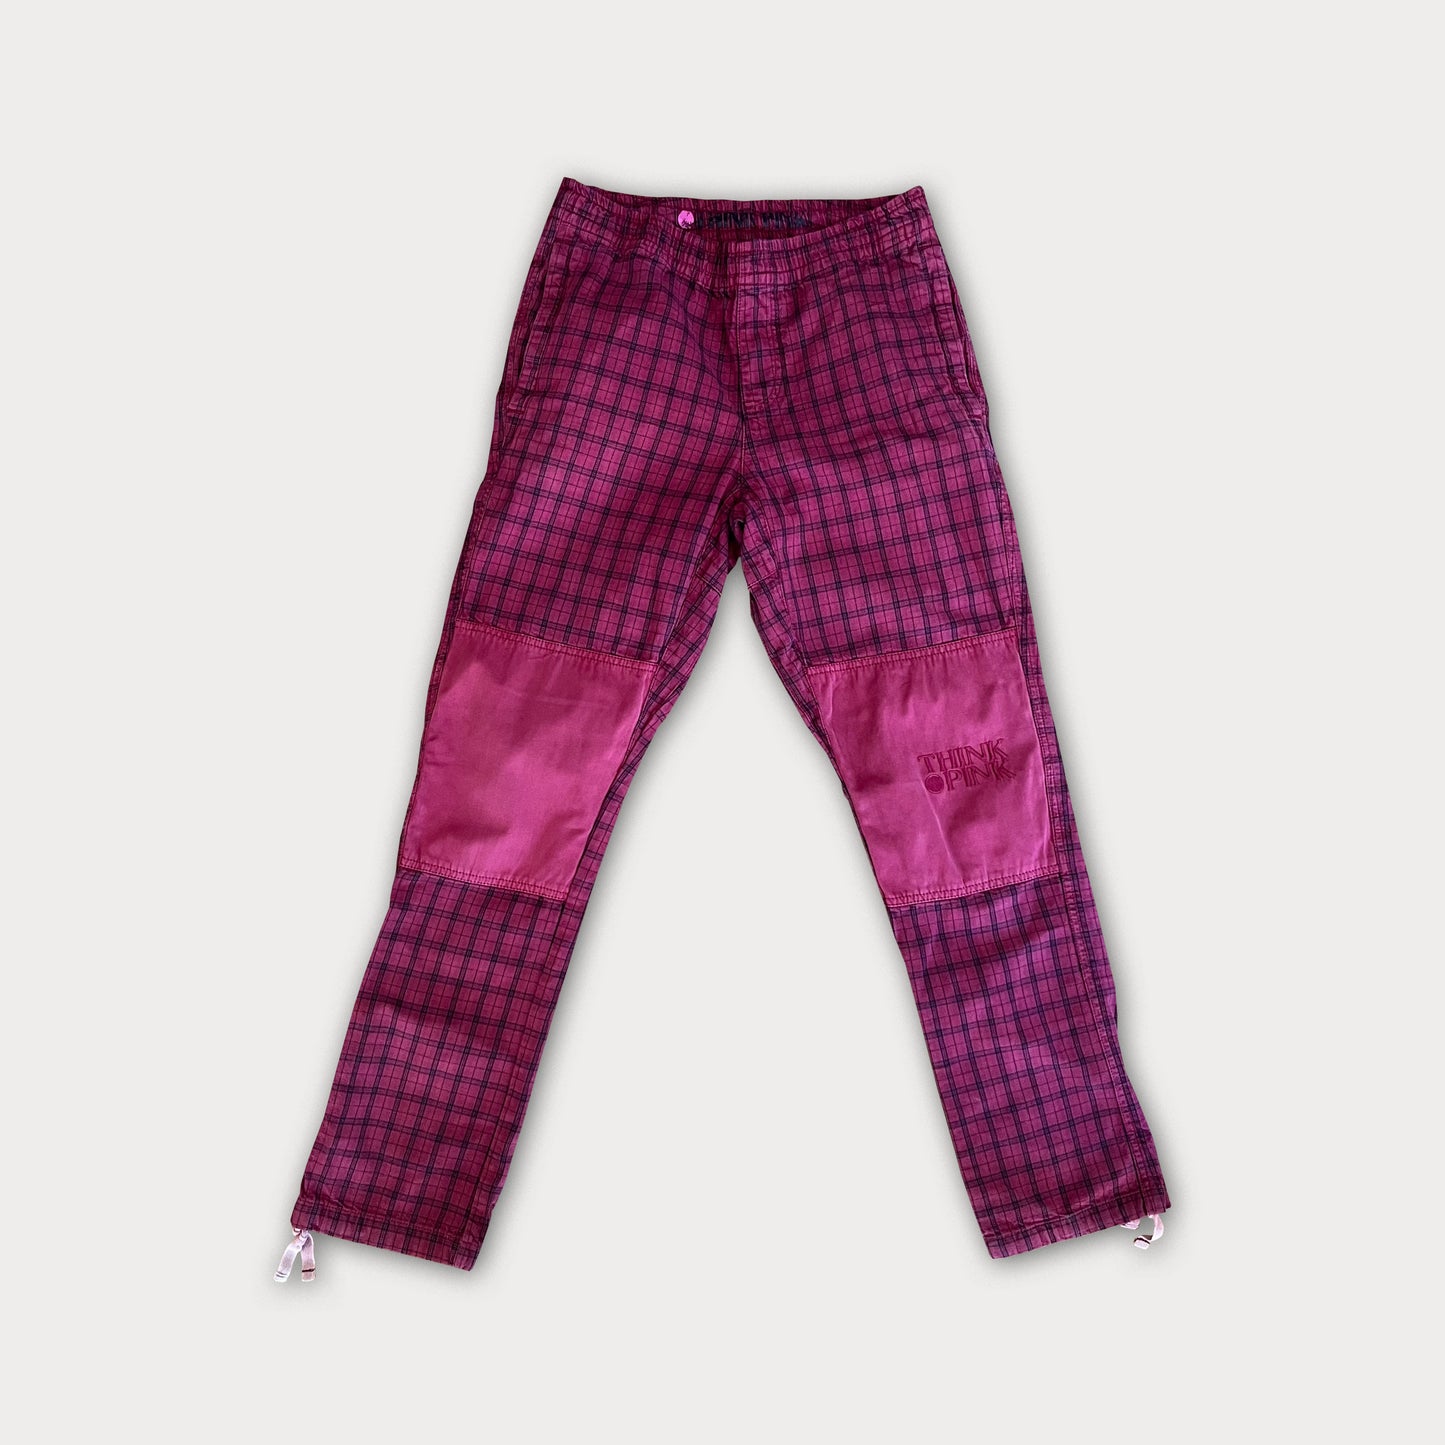 80's Think Pink Pants